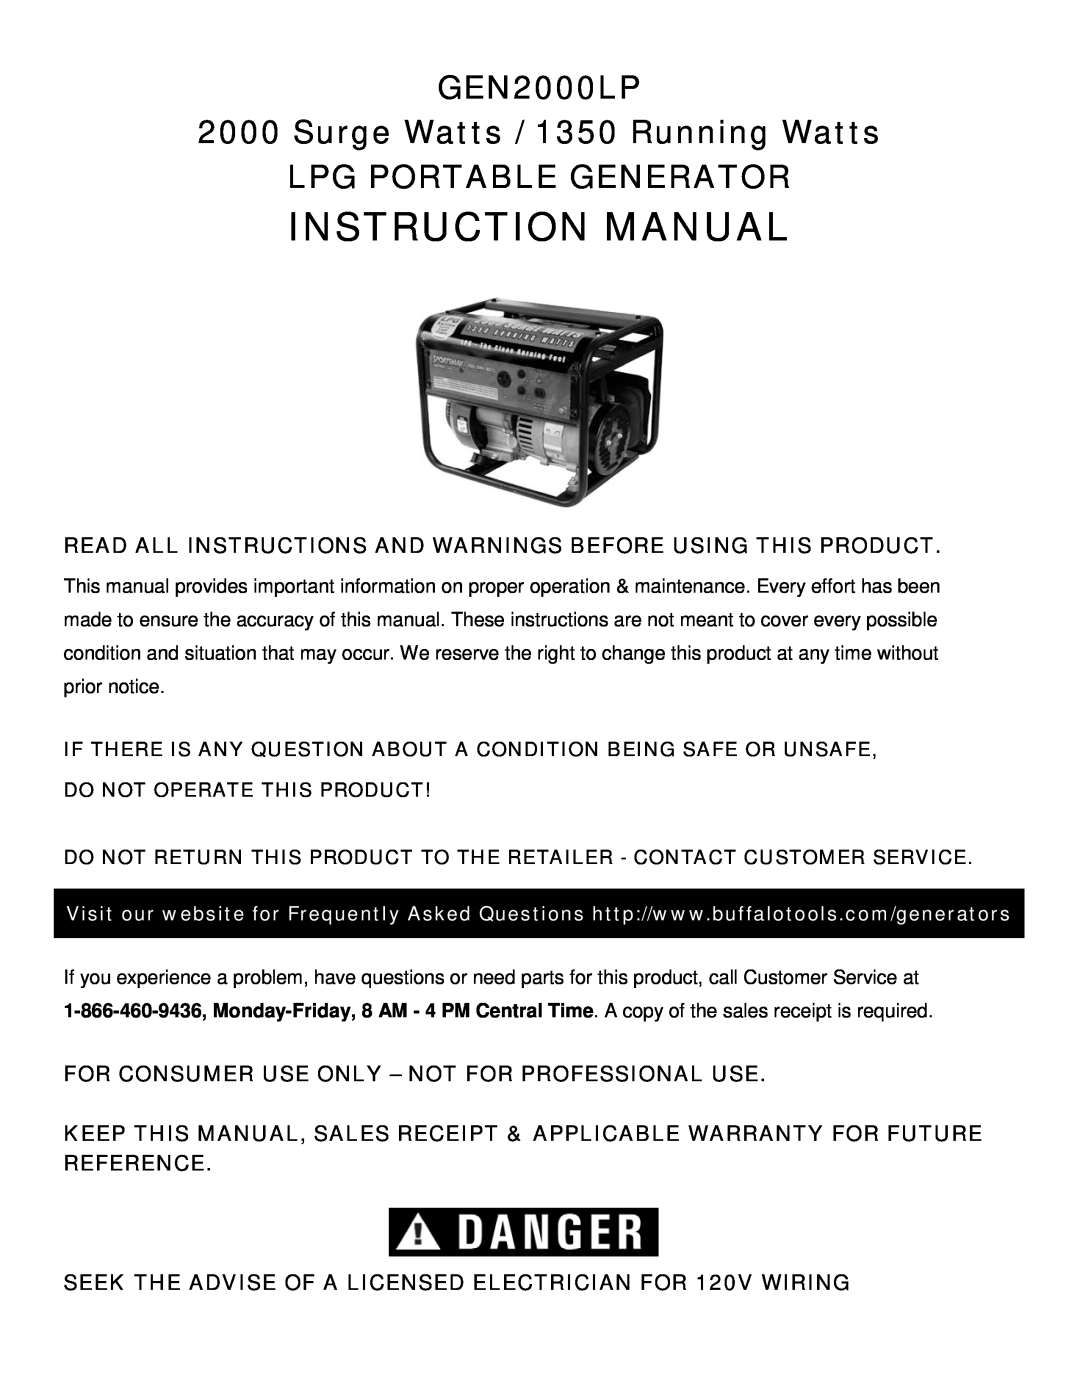 Buffalo Tools instruction manual GEN2000LP 2000 Surge Watts / 1350 Running Watts, Lpg Portable Generator 